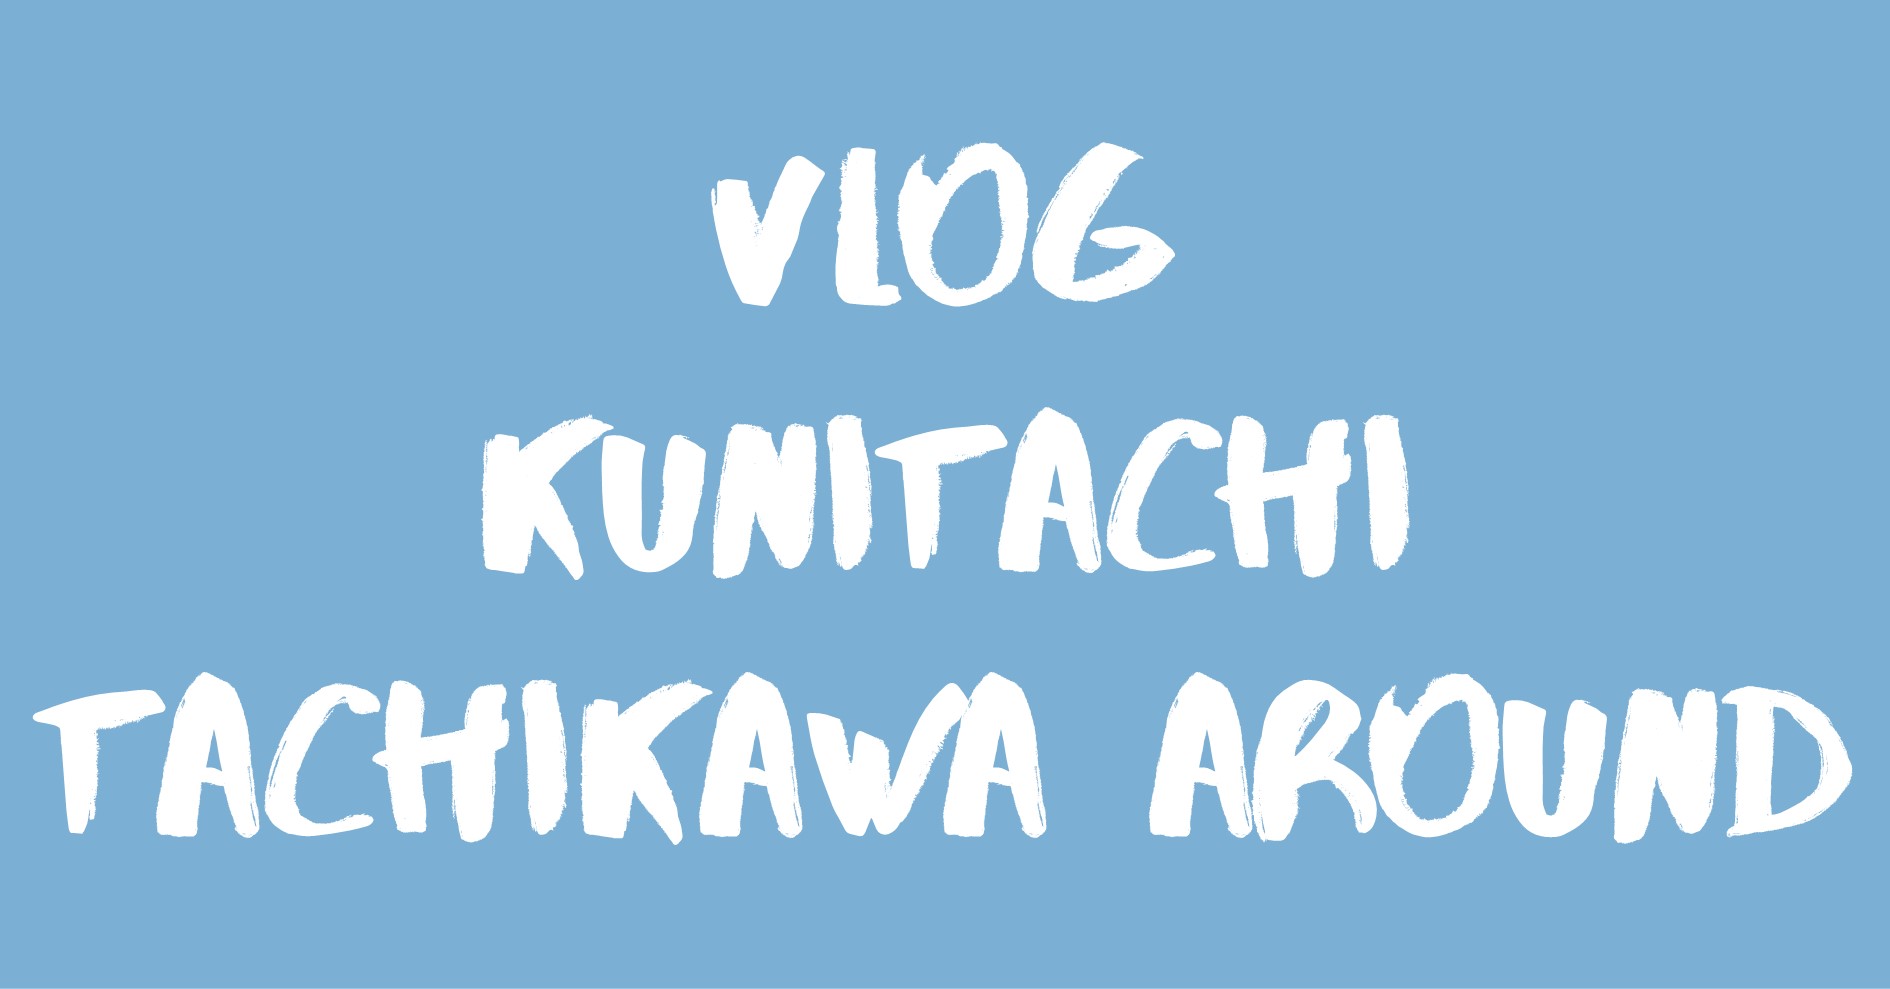 Vlog Kunitachi, Tachikawa & Around